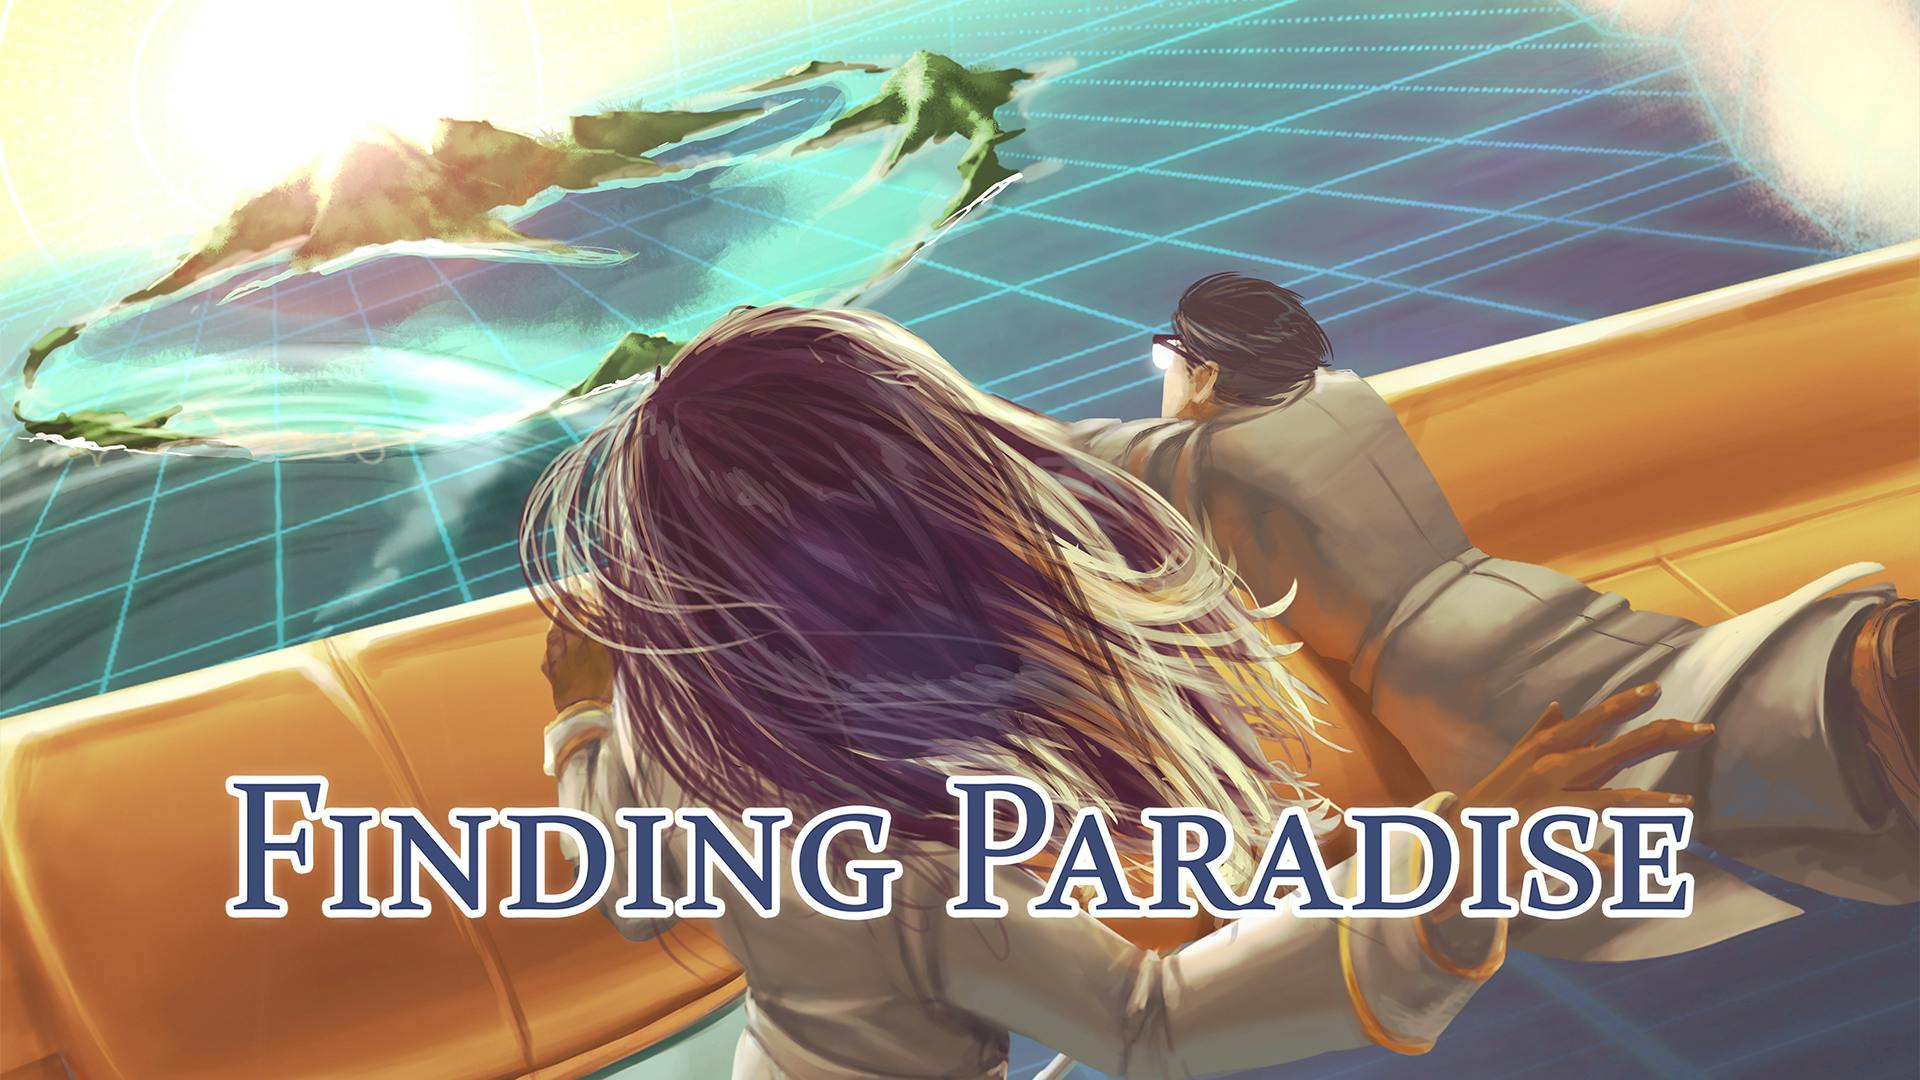 download finding paradise free mac